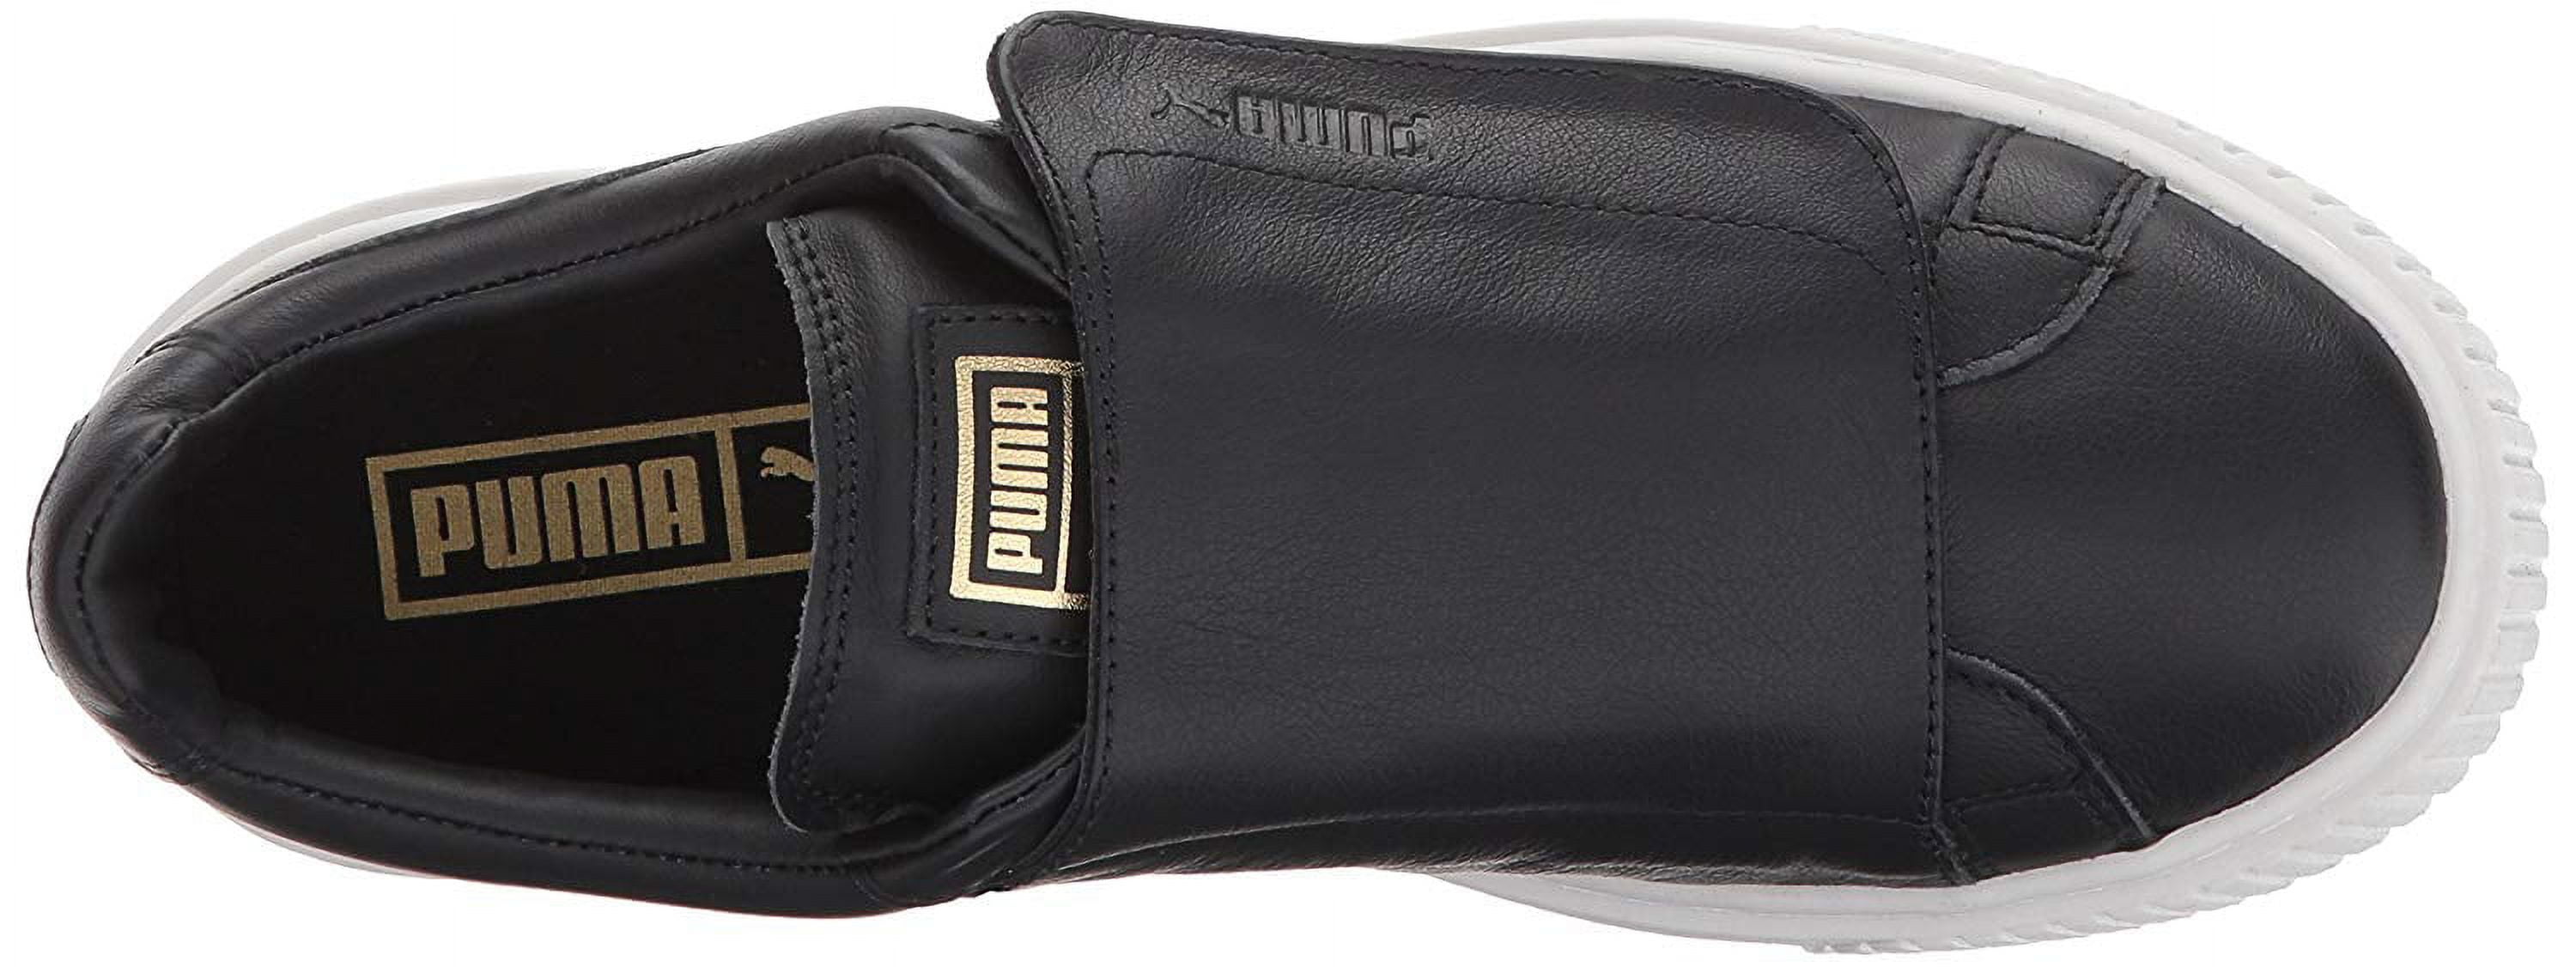 Puma Velcro Shoes Sports Casual - Buy Puma Velcro Shoes Sports Casual  online in India